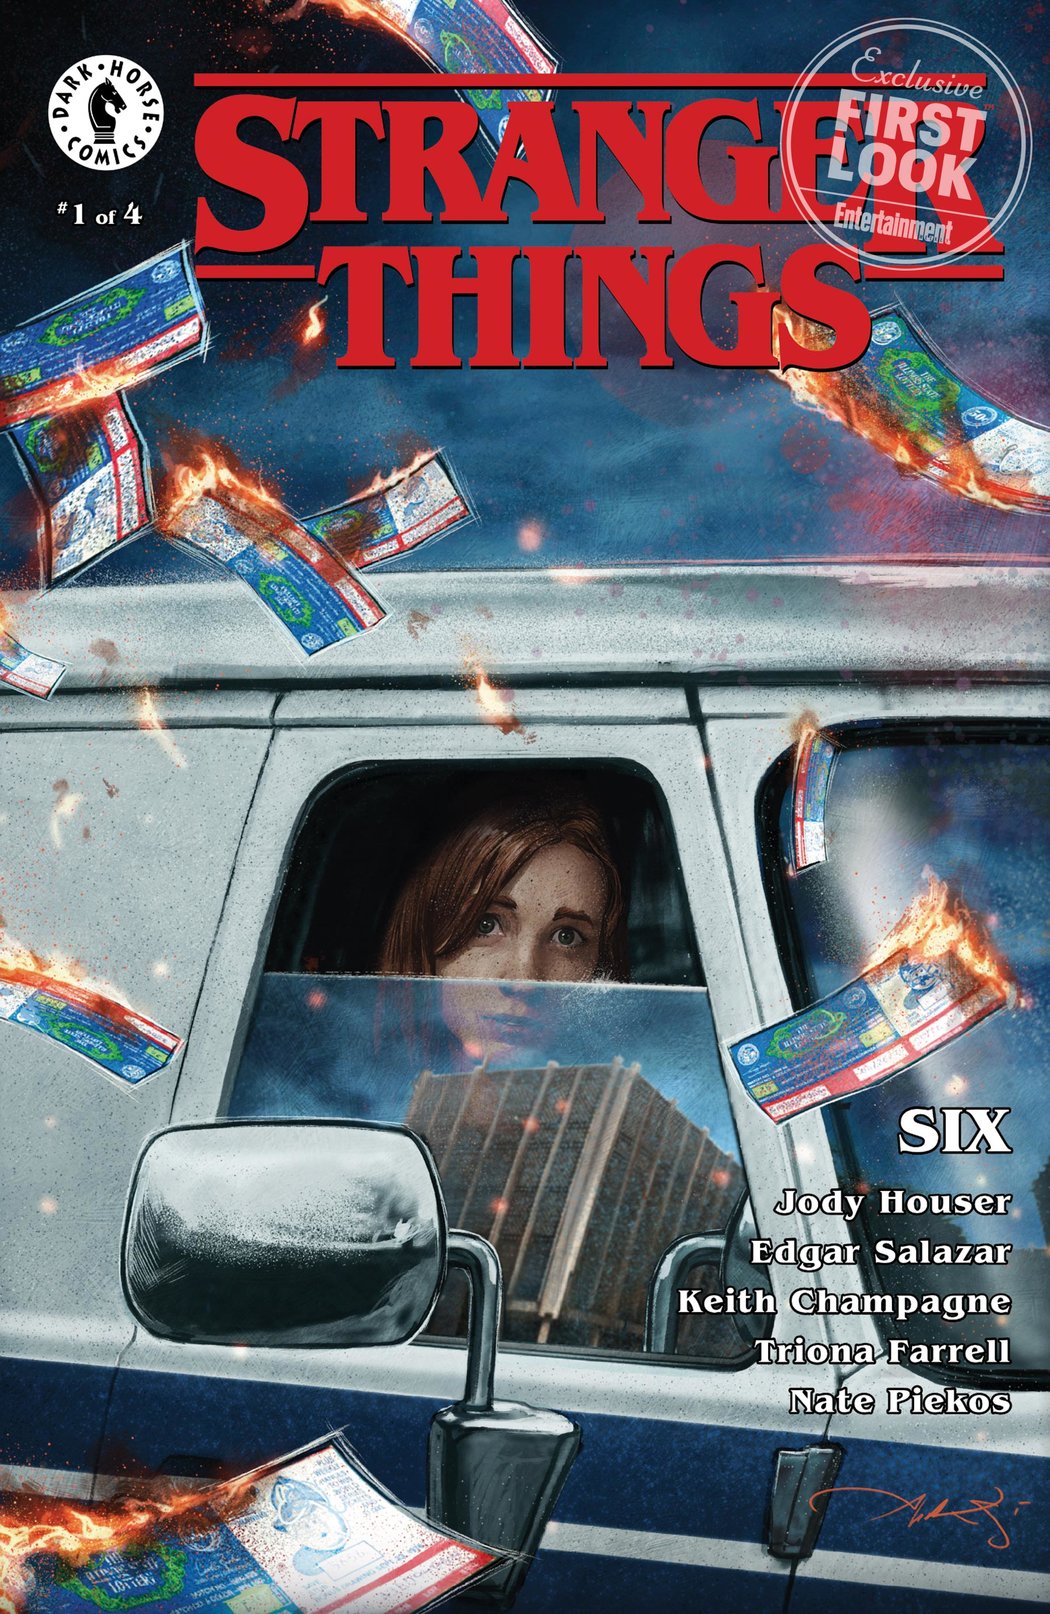 Stranger Things Season 3 Comic Book Cover